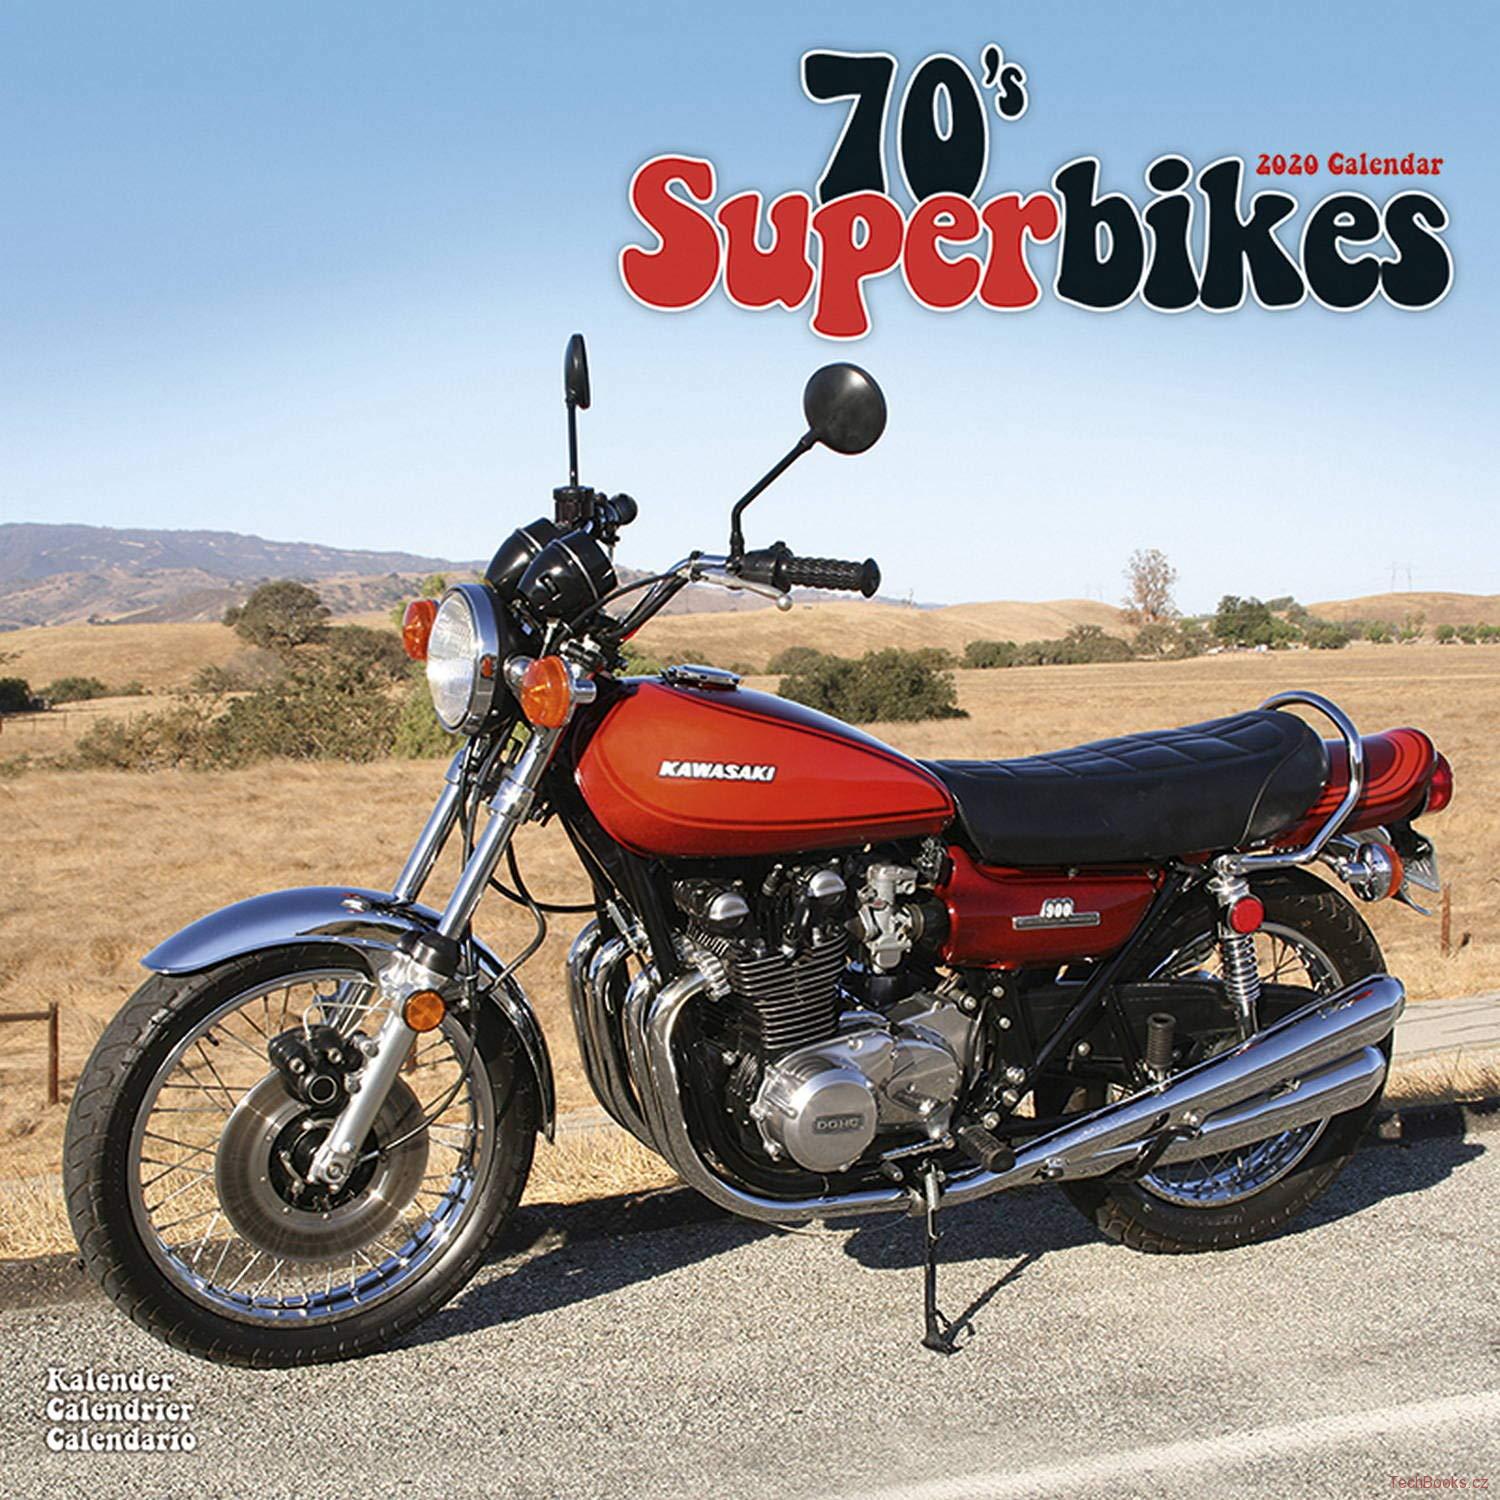 70s Superbikes Calendar 2020